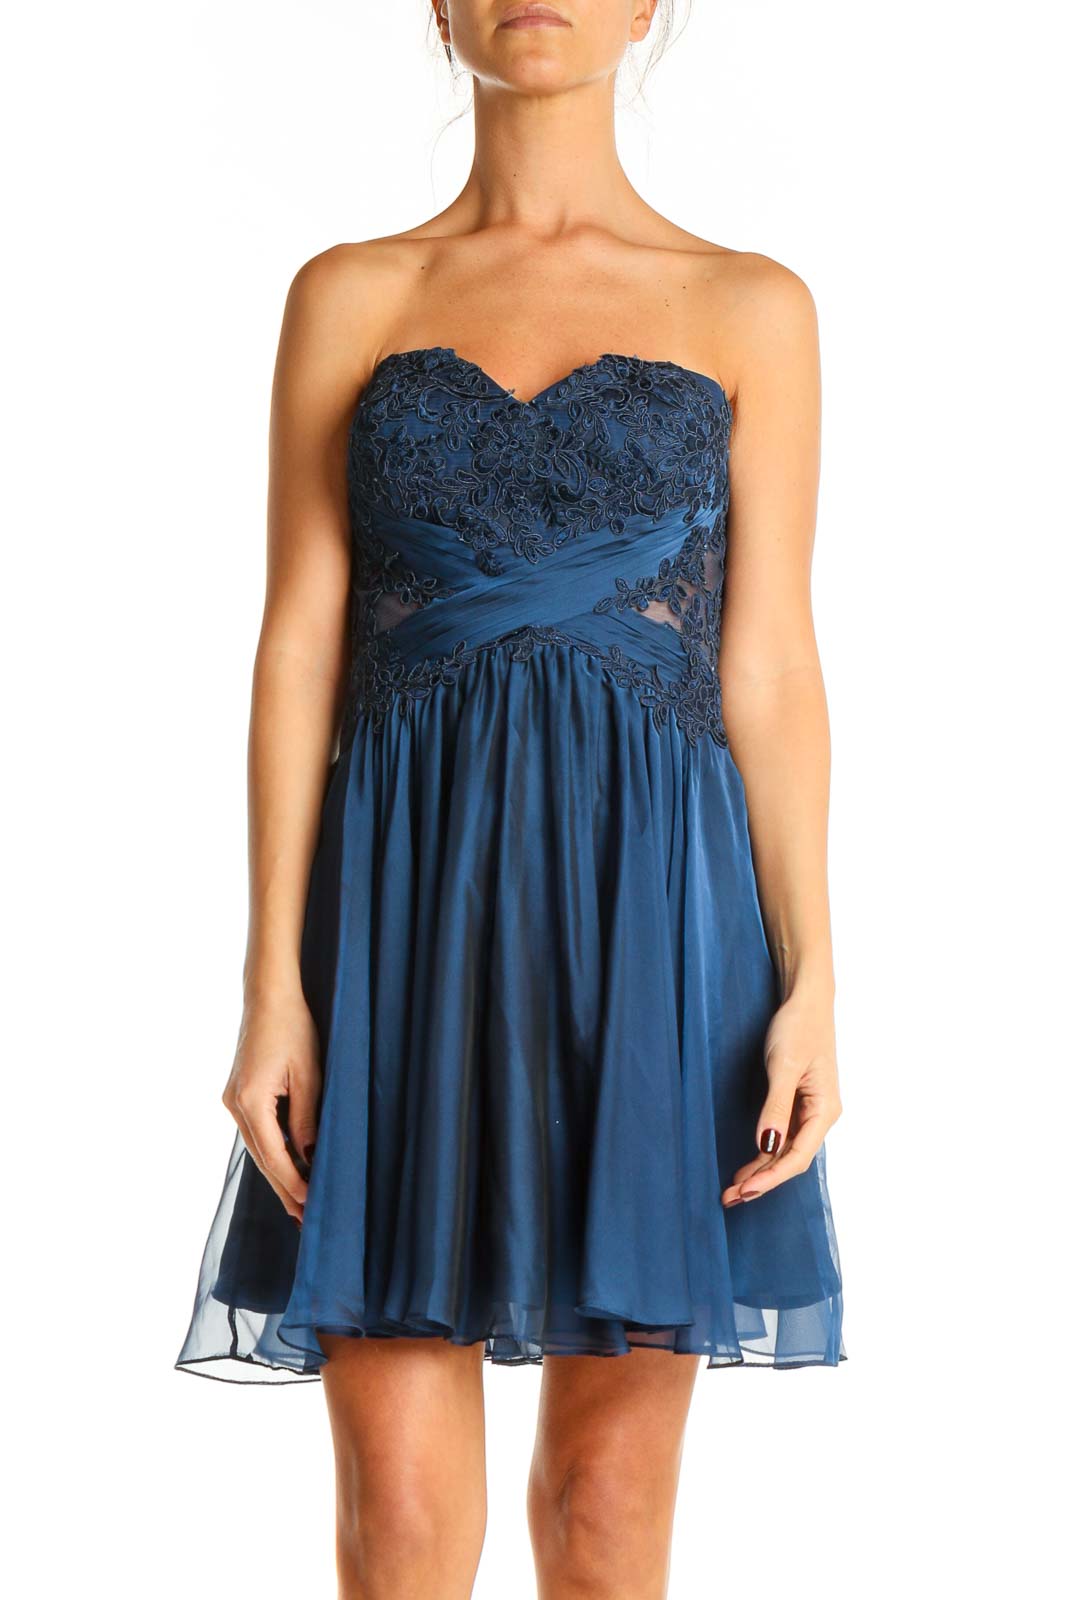 Blue Lace Semi-Floral Fit & Flare Dress Front